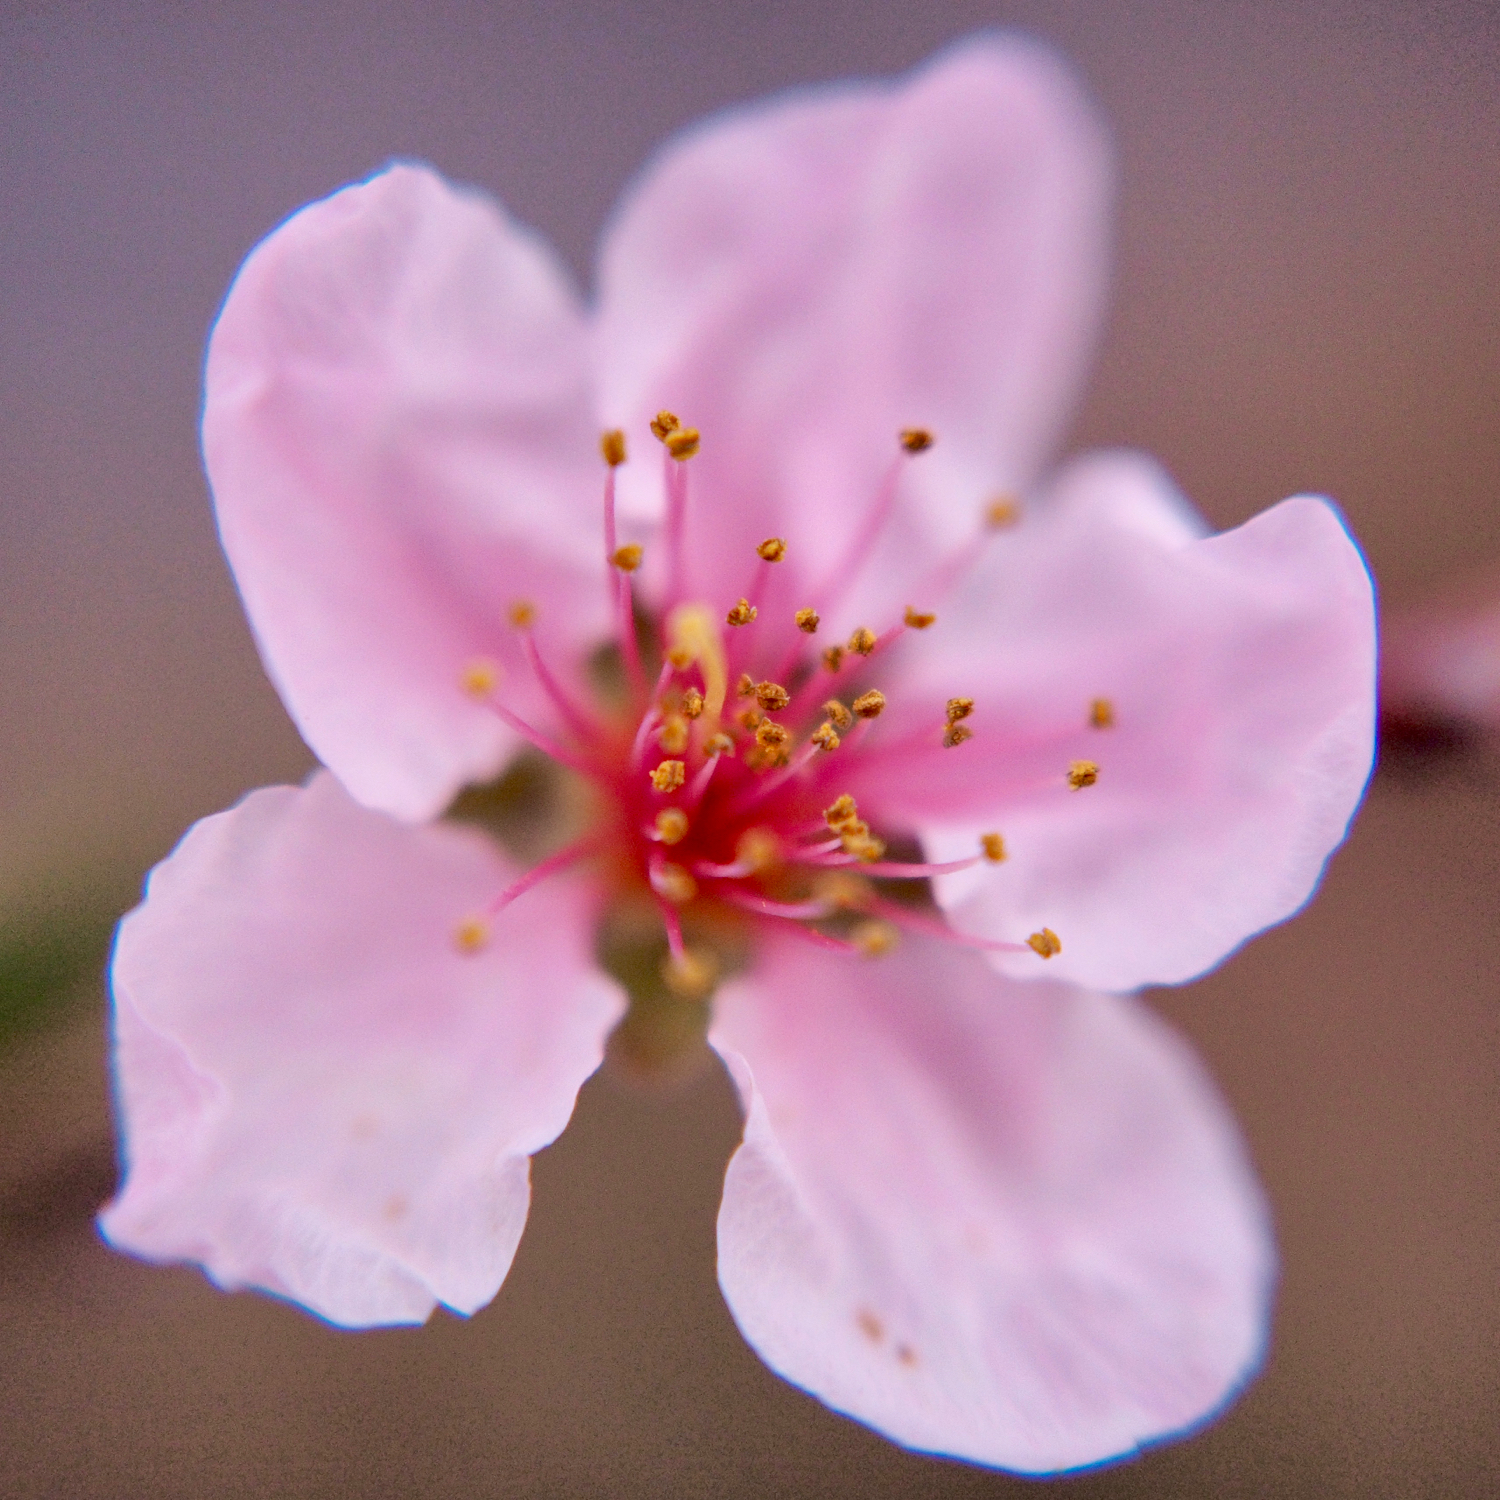 Peach blossom — copyright Trace Meek